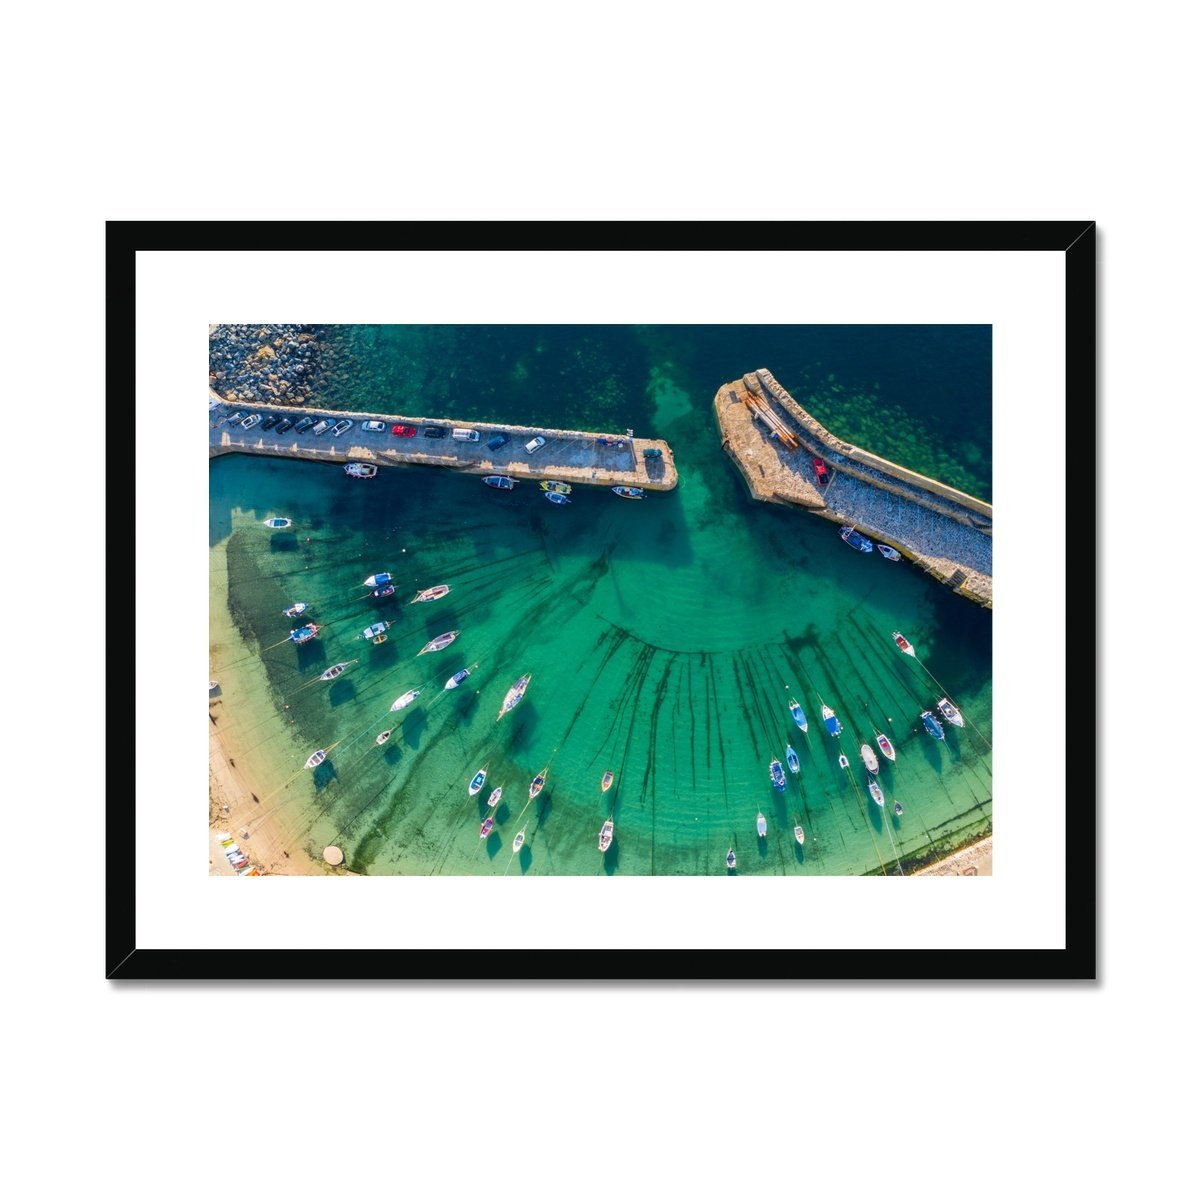 mousehole harbour framed print